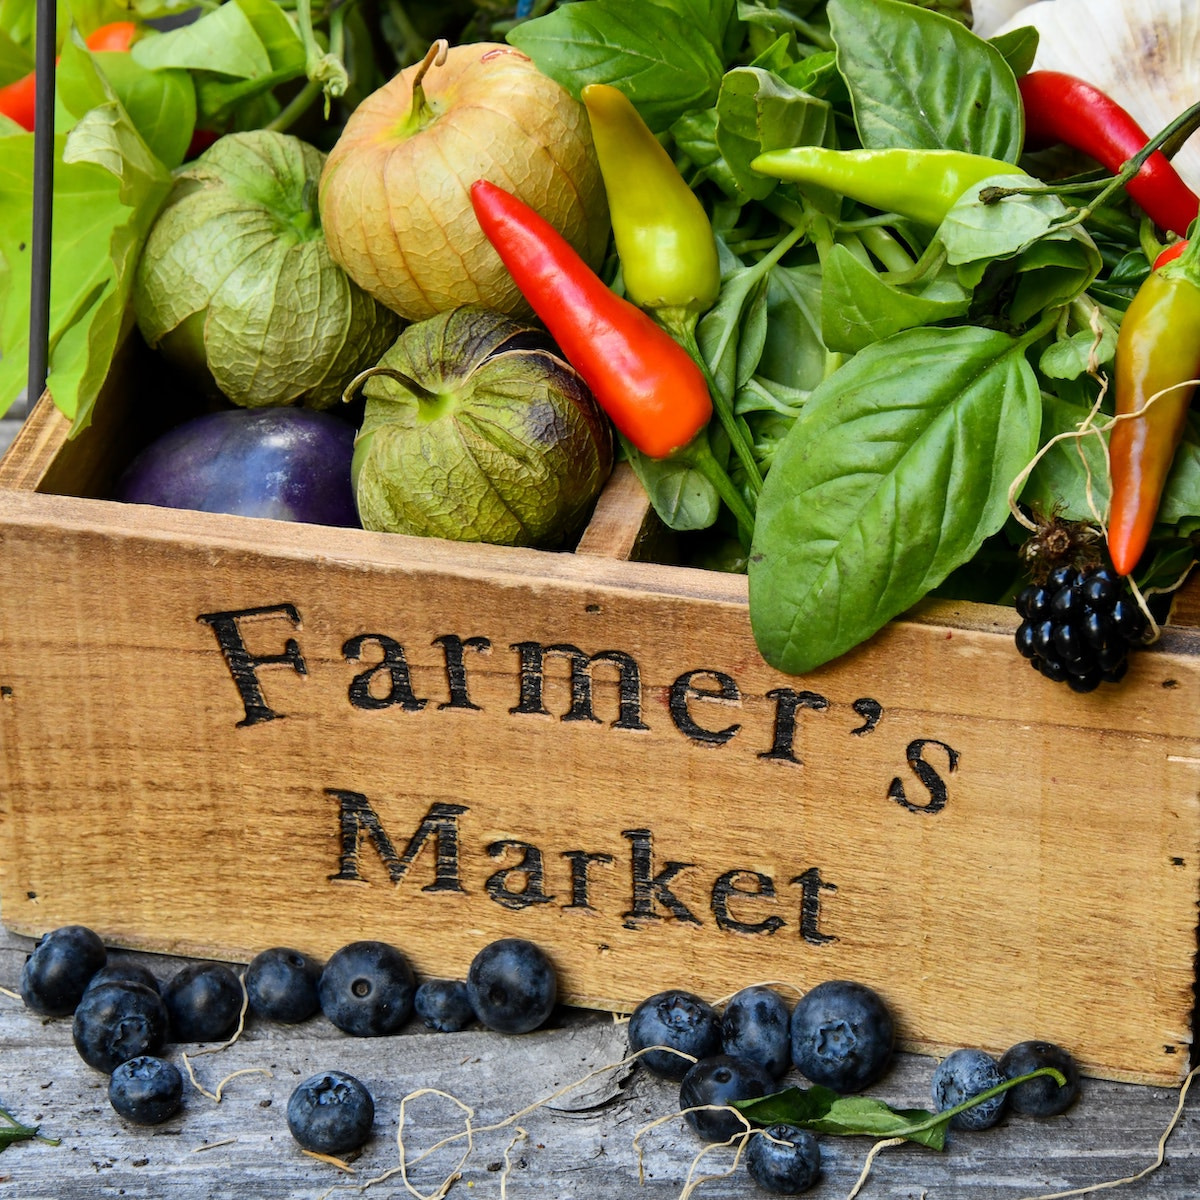 September at Hollywood Farmers’ Market